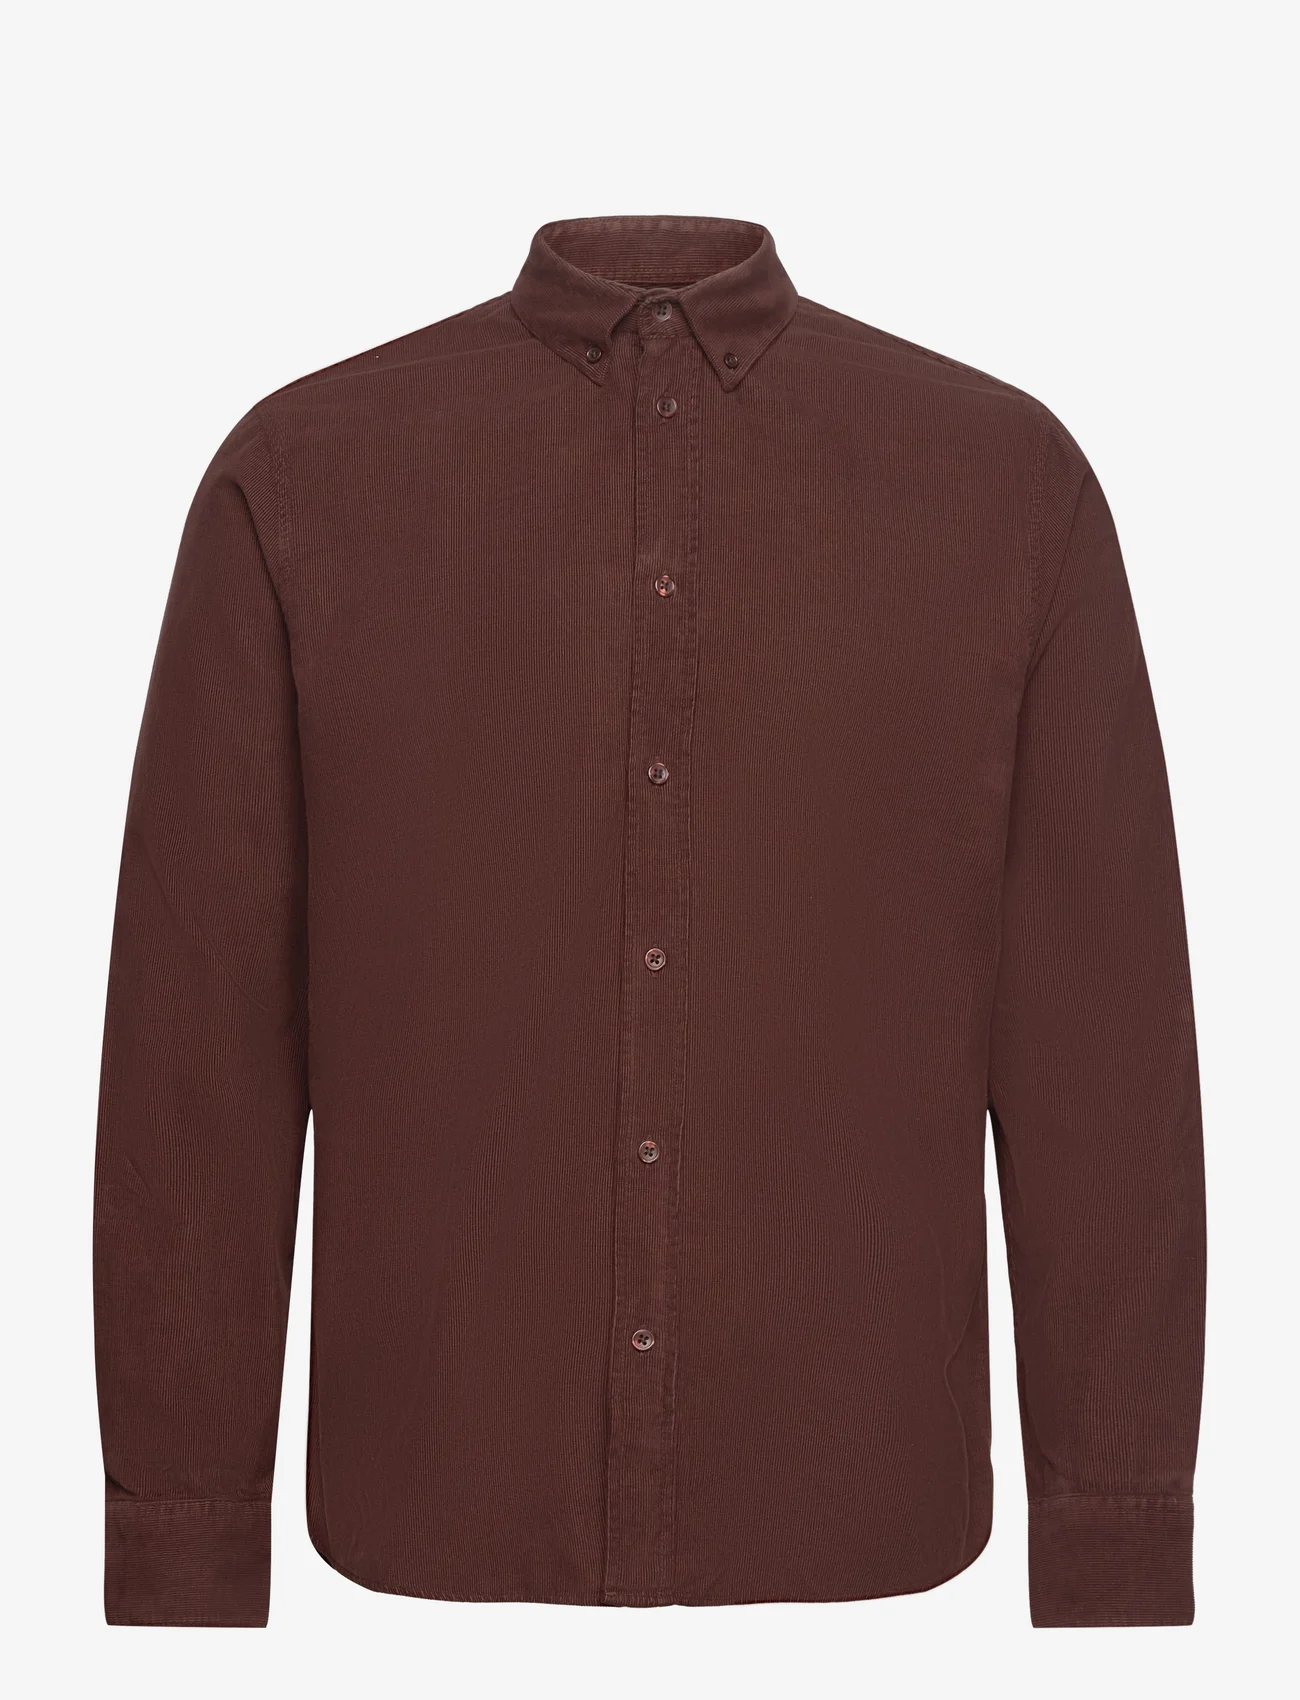 By Garment Makers - Vincent Corduroy Shirt GOTS - koszule sztruksowe - 1258 beaver - 0